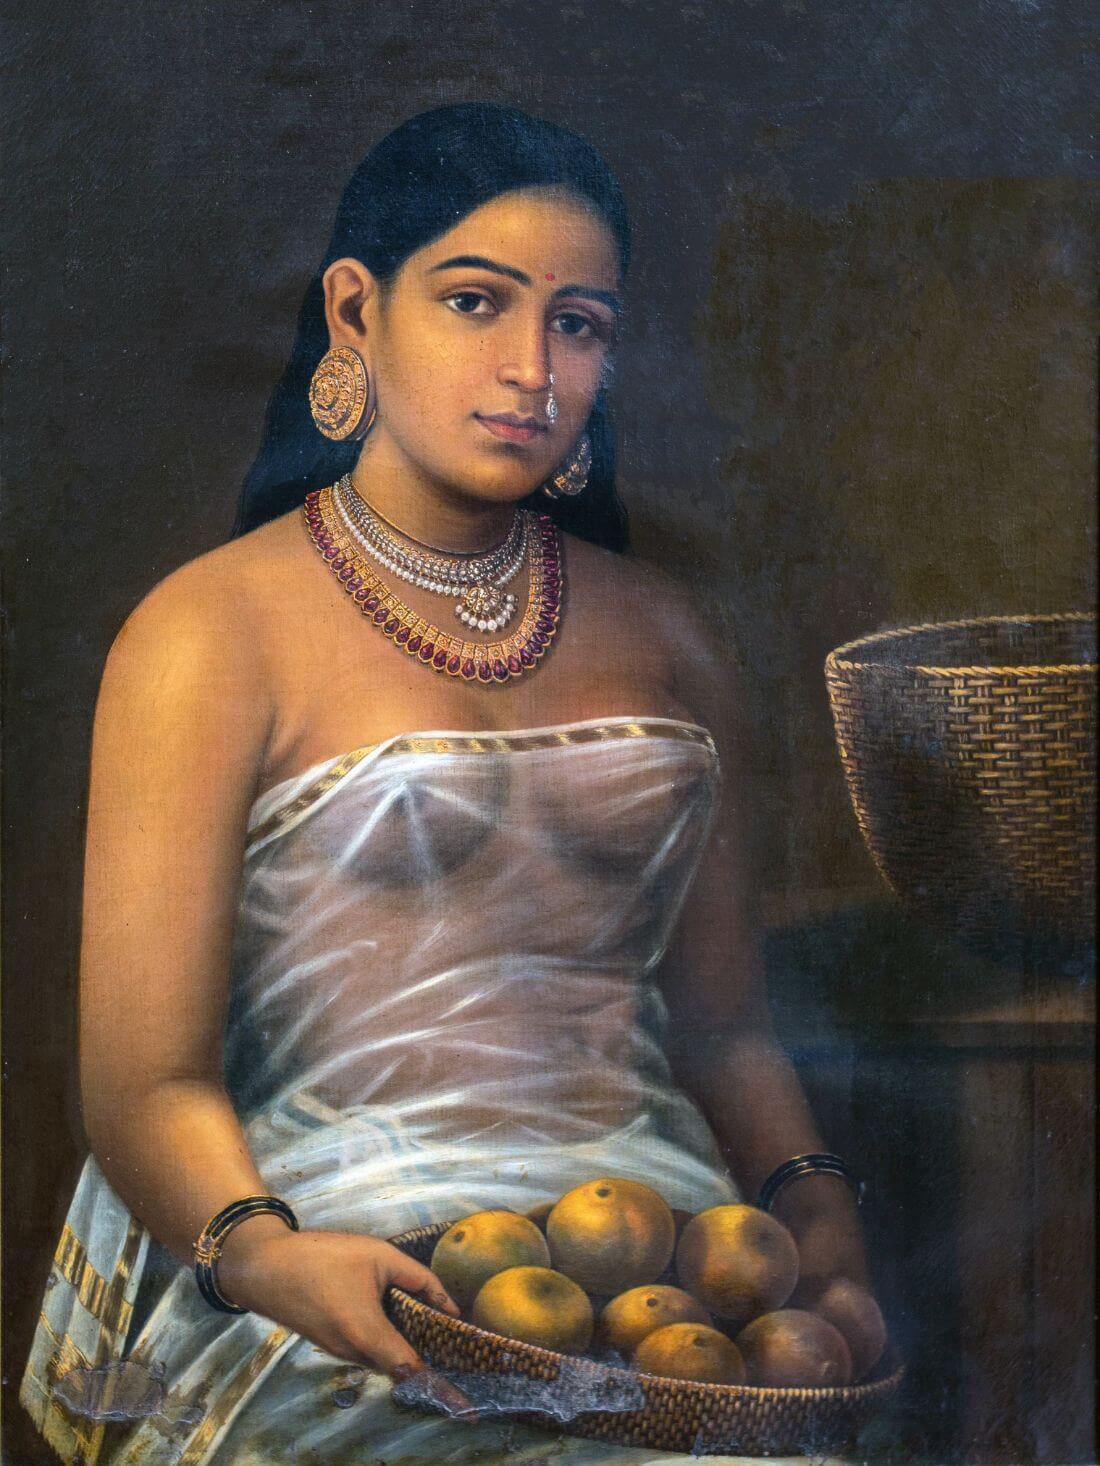 Lady With Fruits - Raja Ravi Varma Painting - Vintage Indian Art